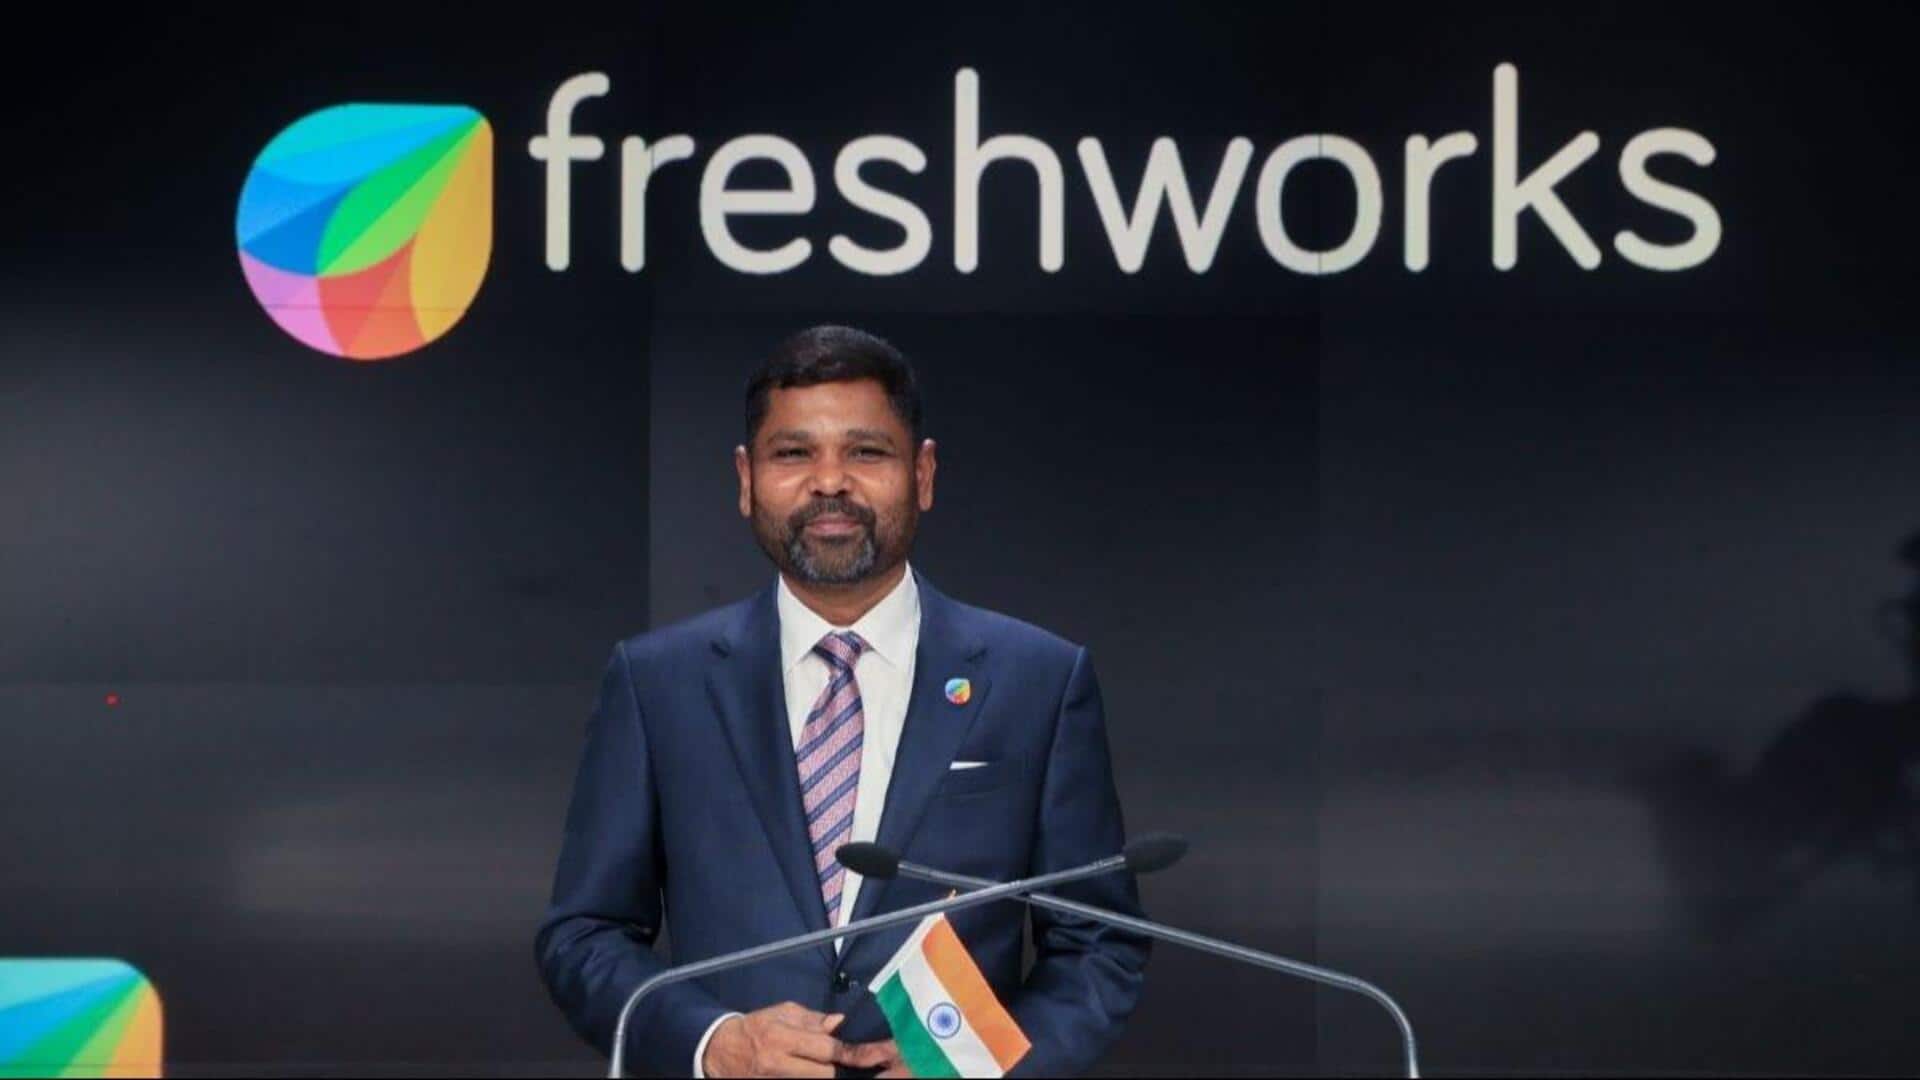 Freshworks CEO Girish Mathrubootham steps down, Dennis Woodside takes over